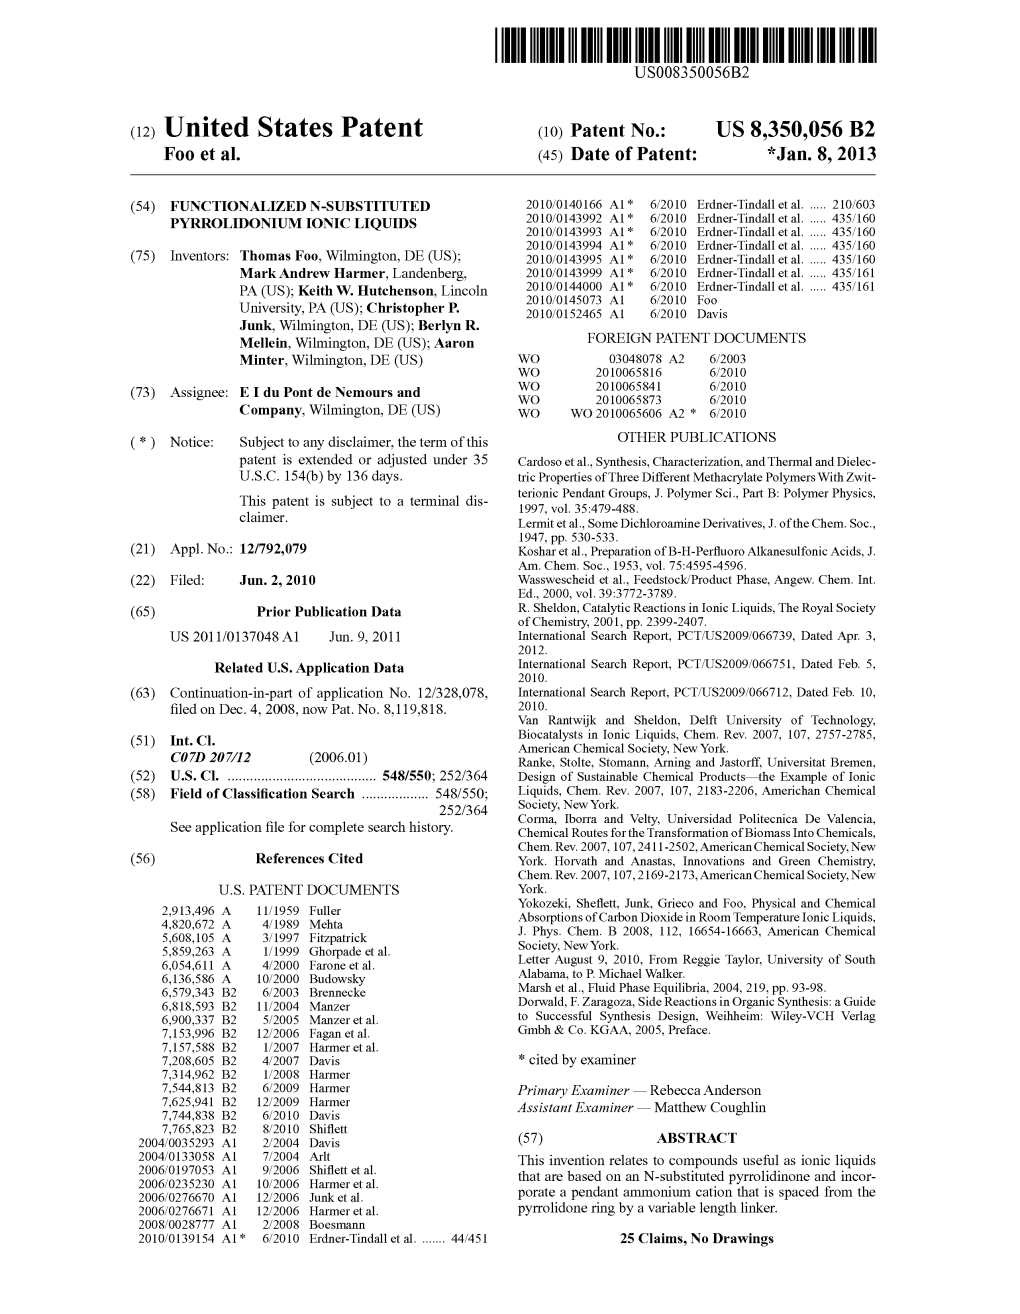 (12) United States Patent (10) Patent No.: US 8,350,056 B2 FOO Et Al